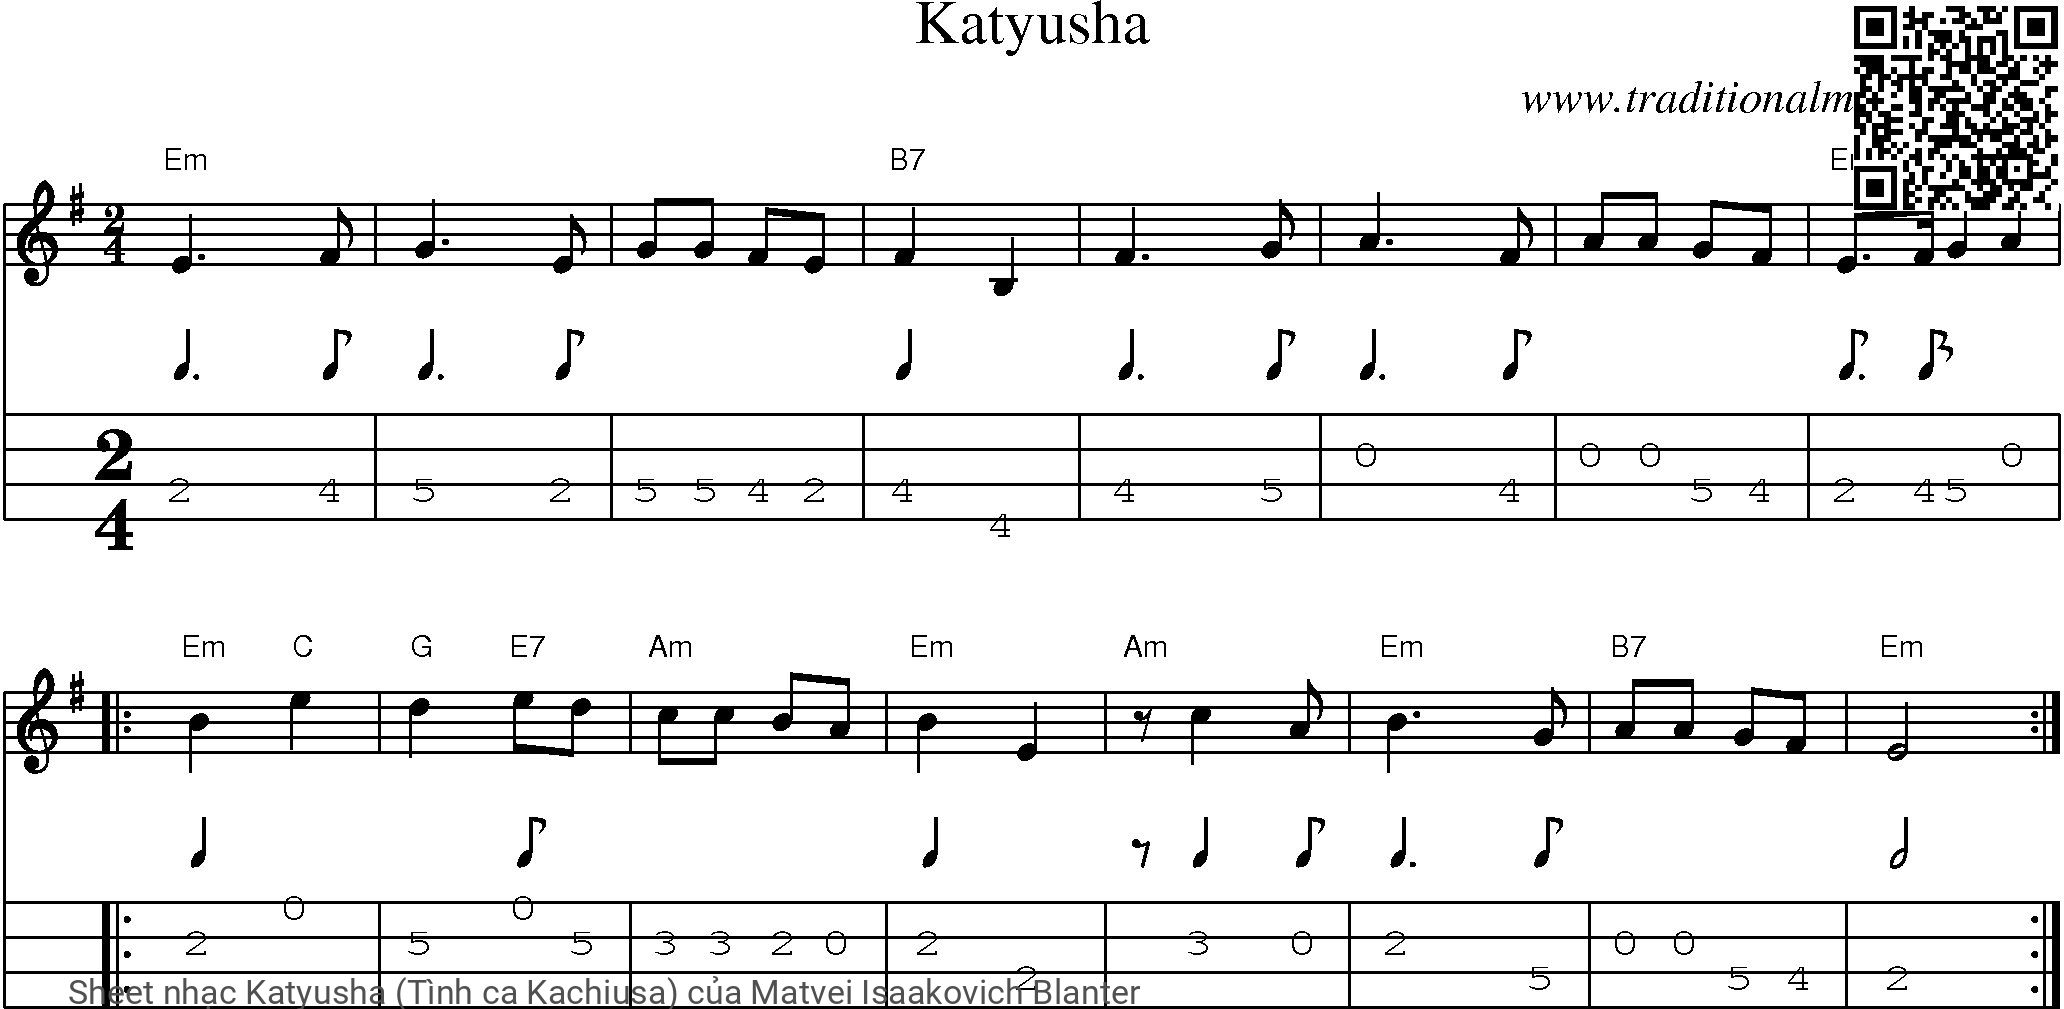 Sheet nhạc Katyusha (Tình ca Kachiusa)